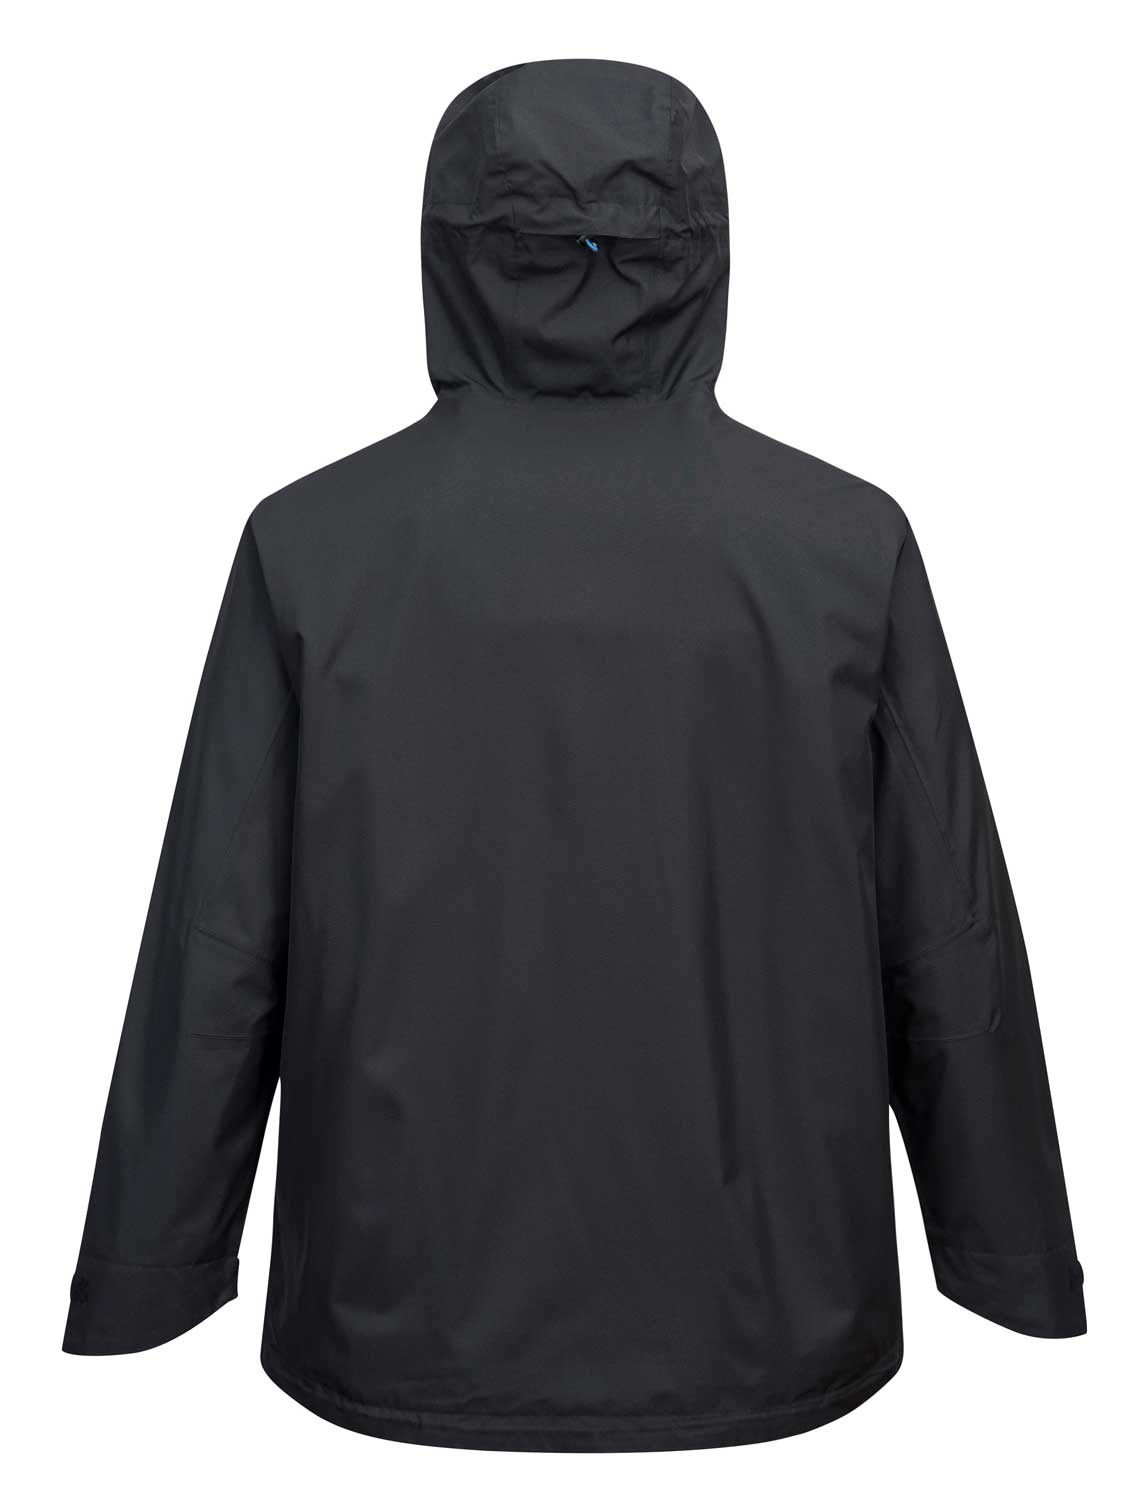 Portwest S600 X3 Waterproof Shell Jacket black back view